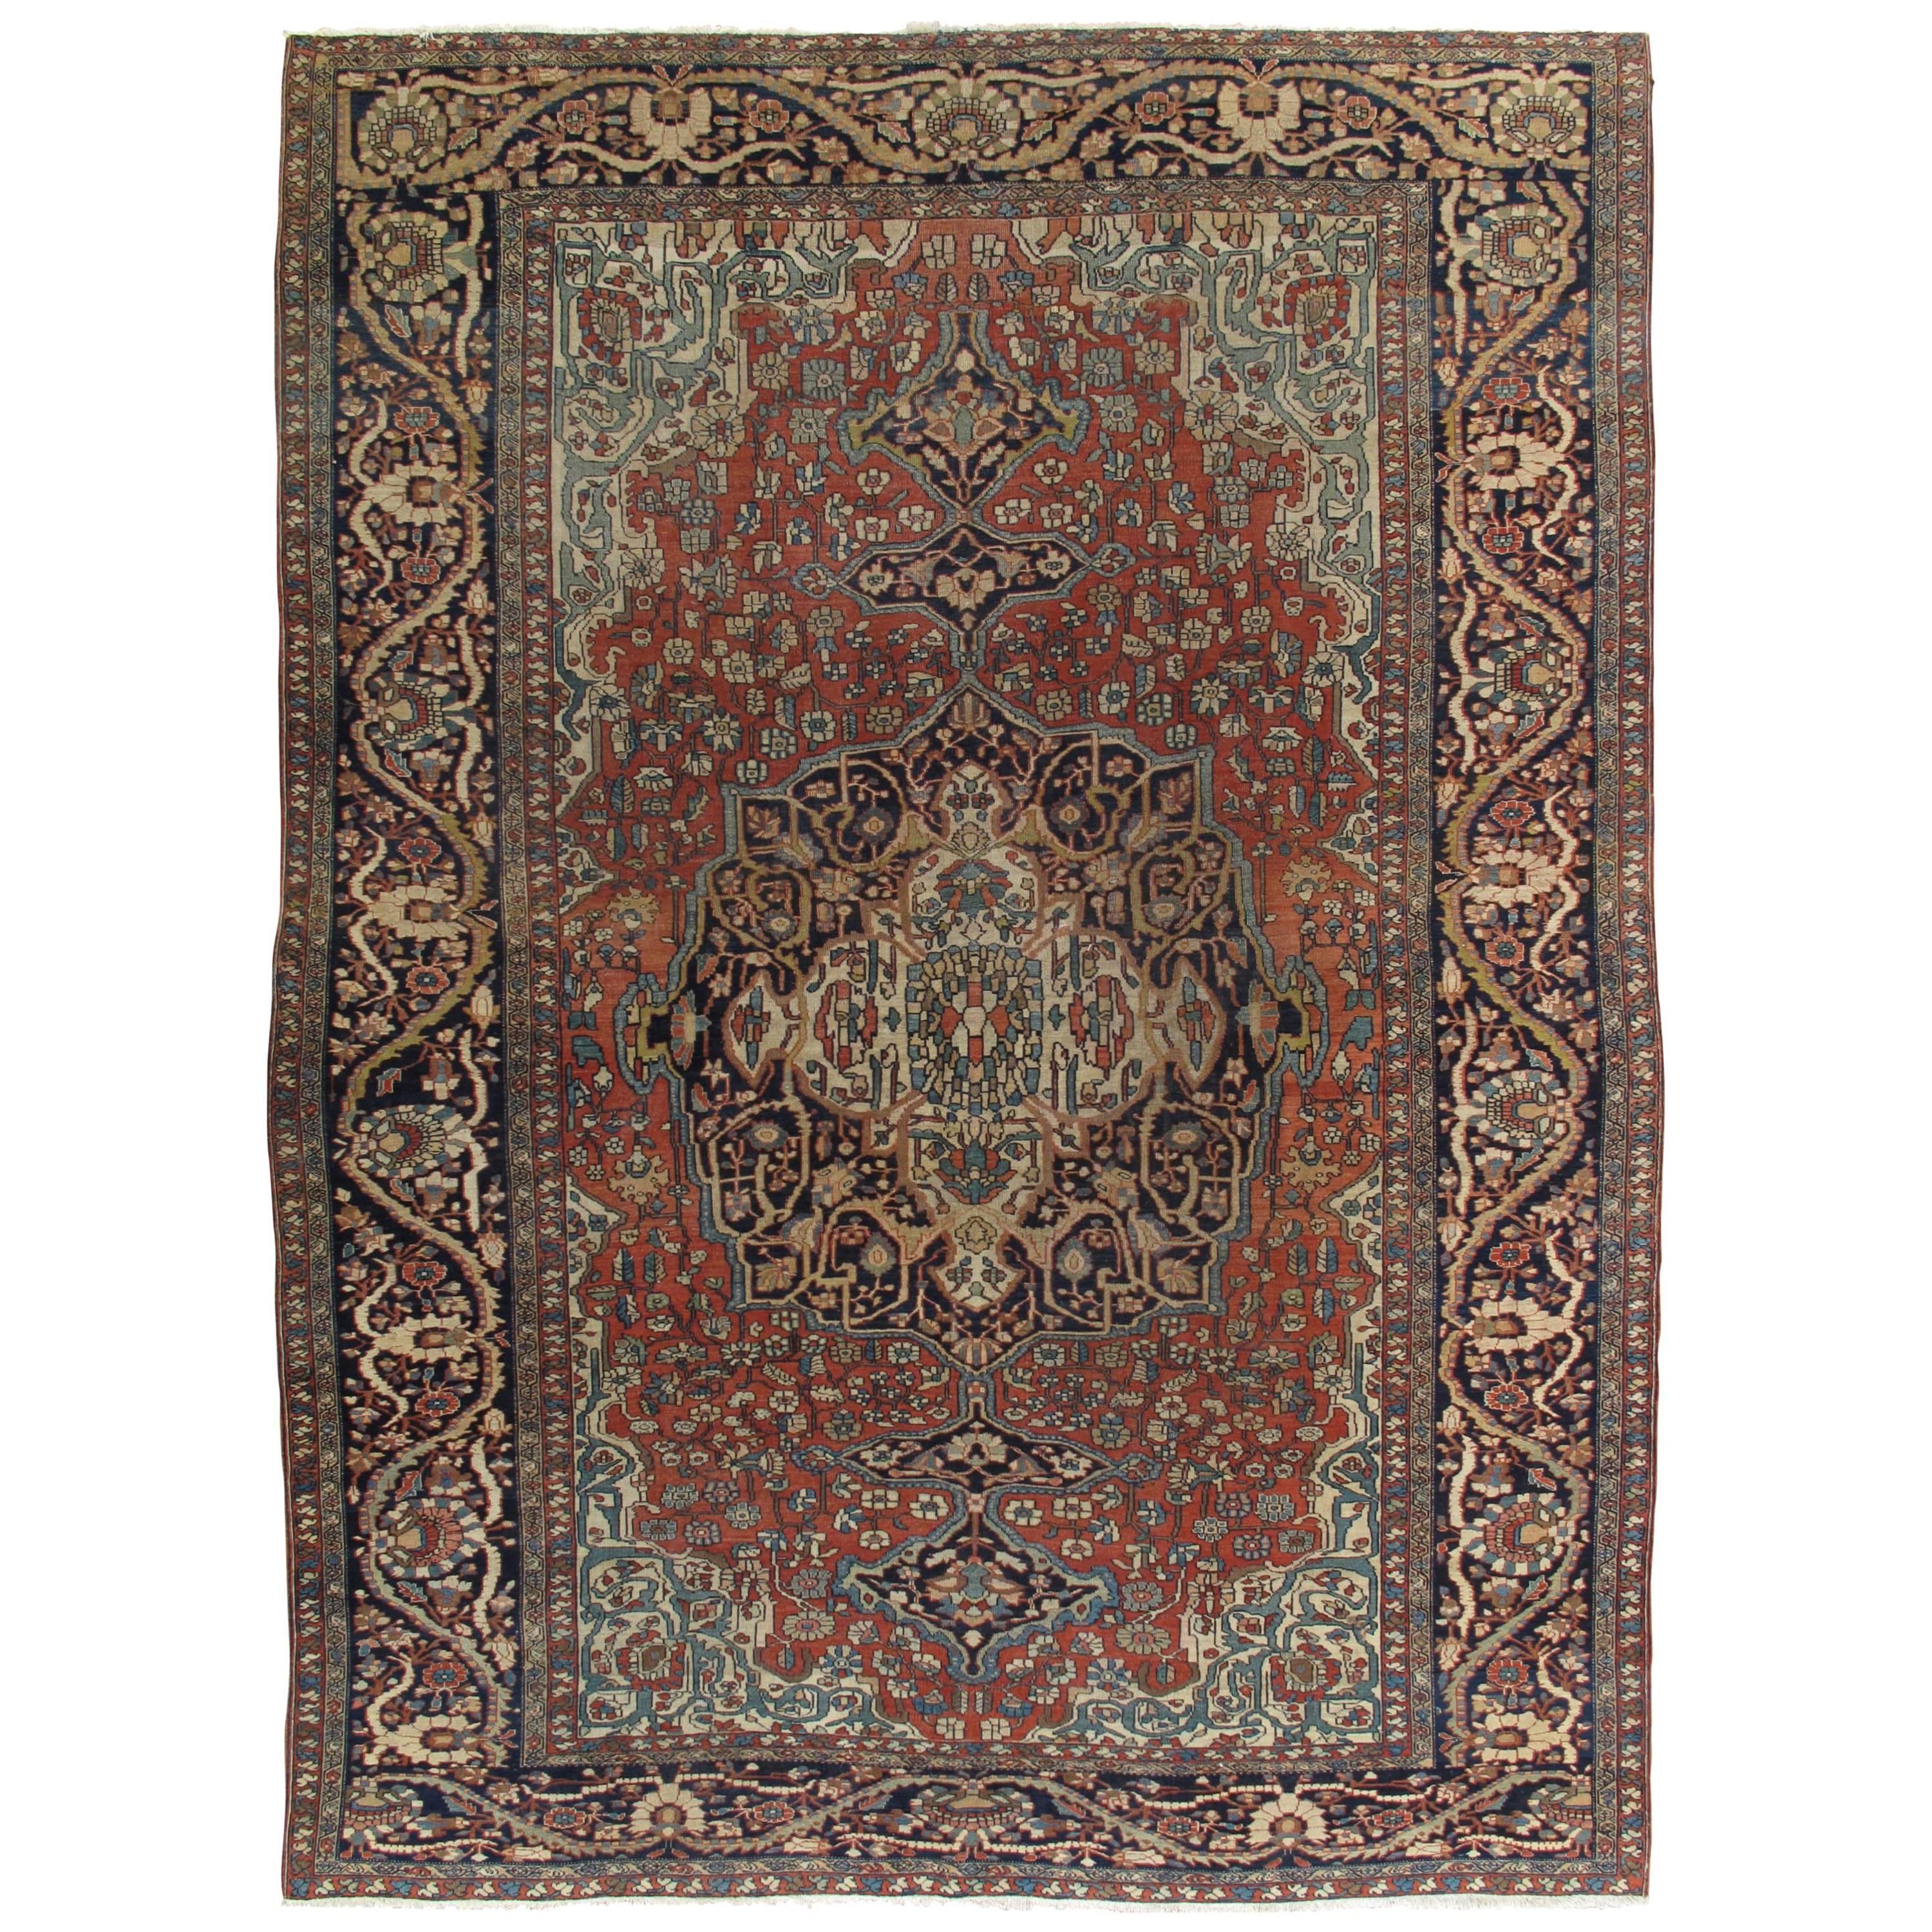 Antique Farahan Sarouk Carpet, Handmade Oriental Rug, Ivory, Navy, Green, Rust